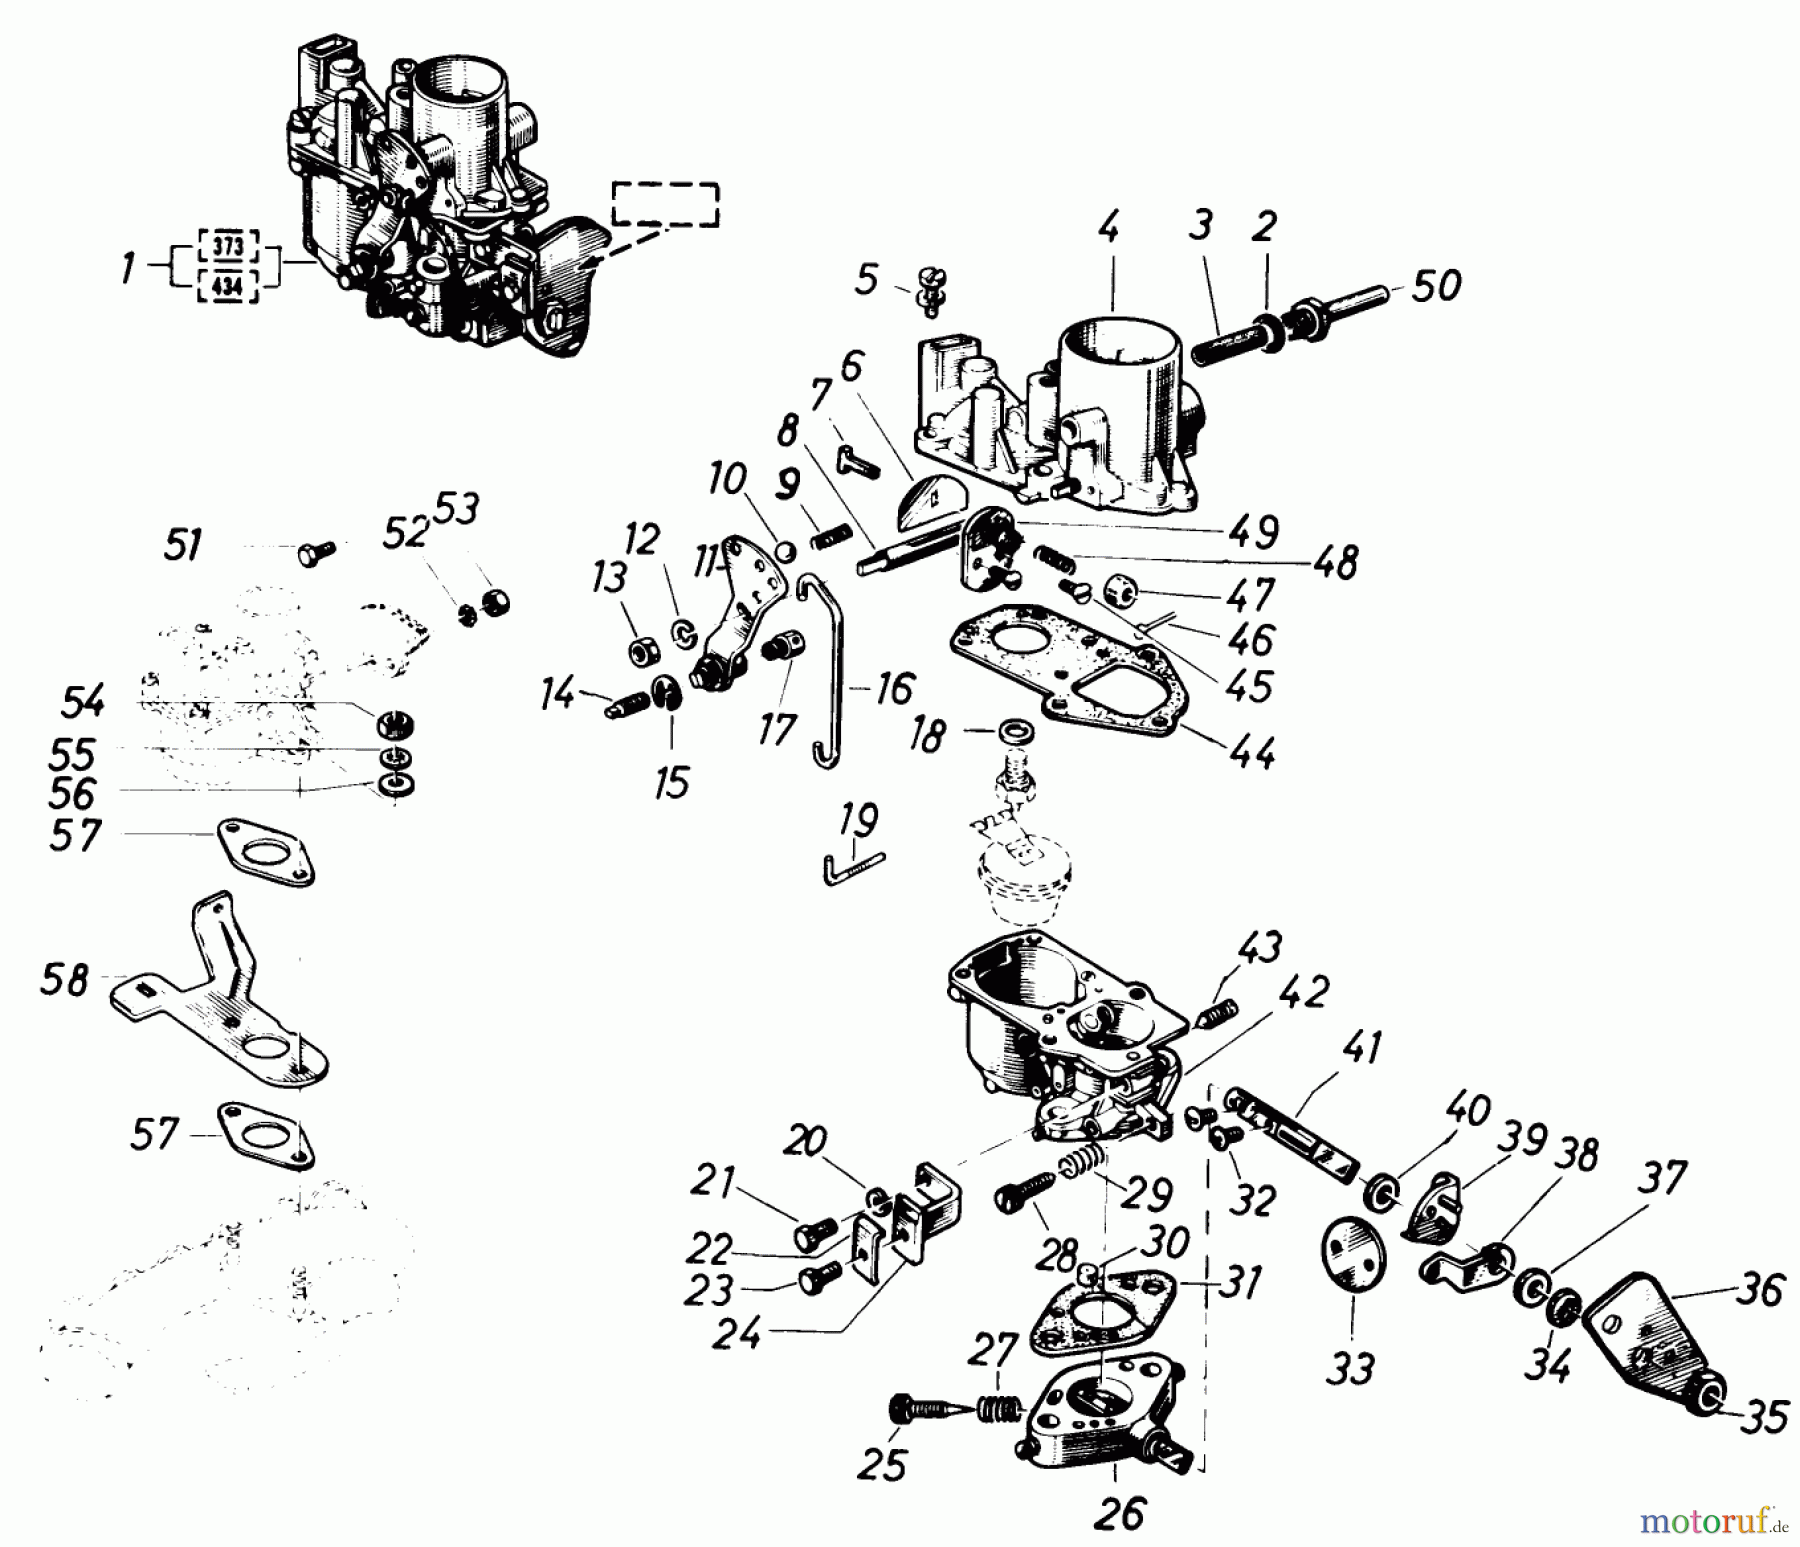  Toro Neu Mowers, Lawn & Garden Tractor Seite 1 61-20RG01 (D-250) - Toro D-250 10-Speed Tractor, 1977 CARBURETOR-